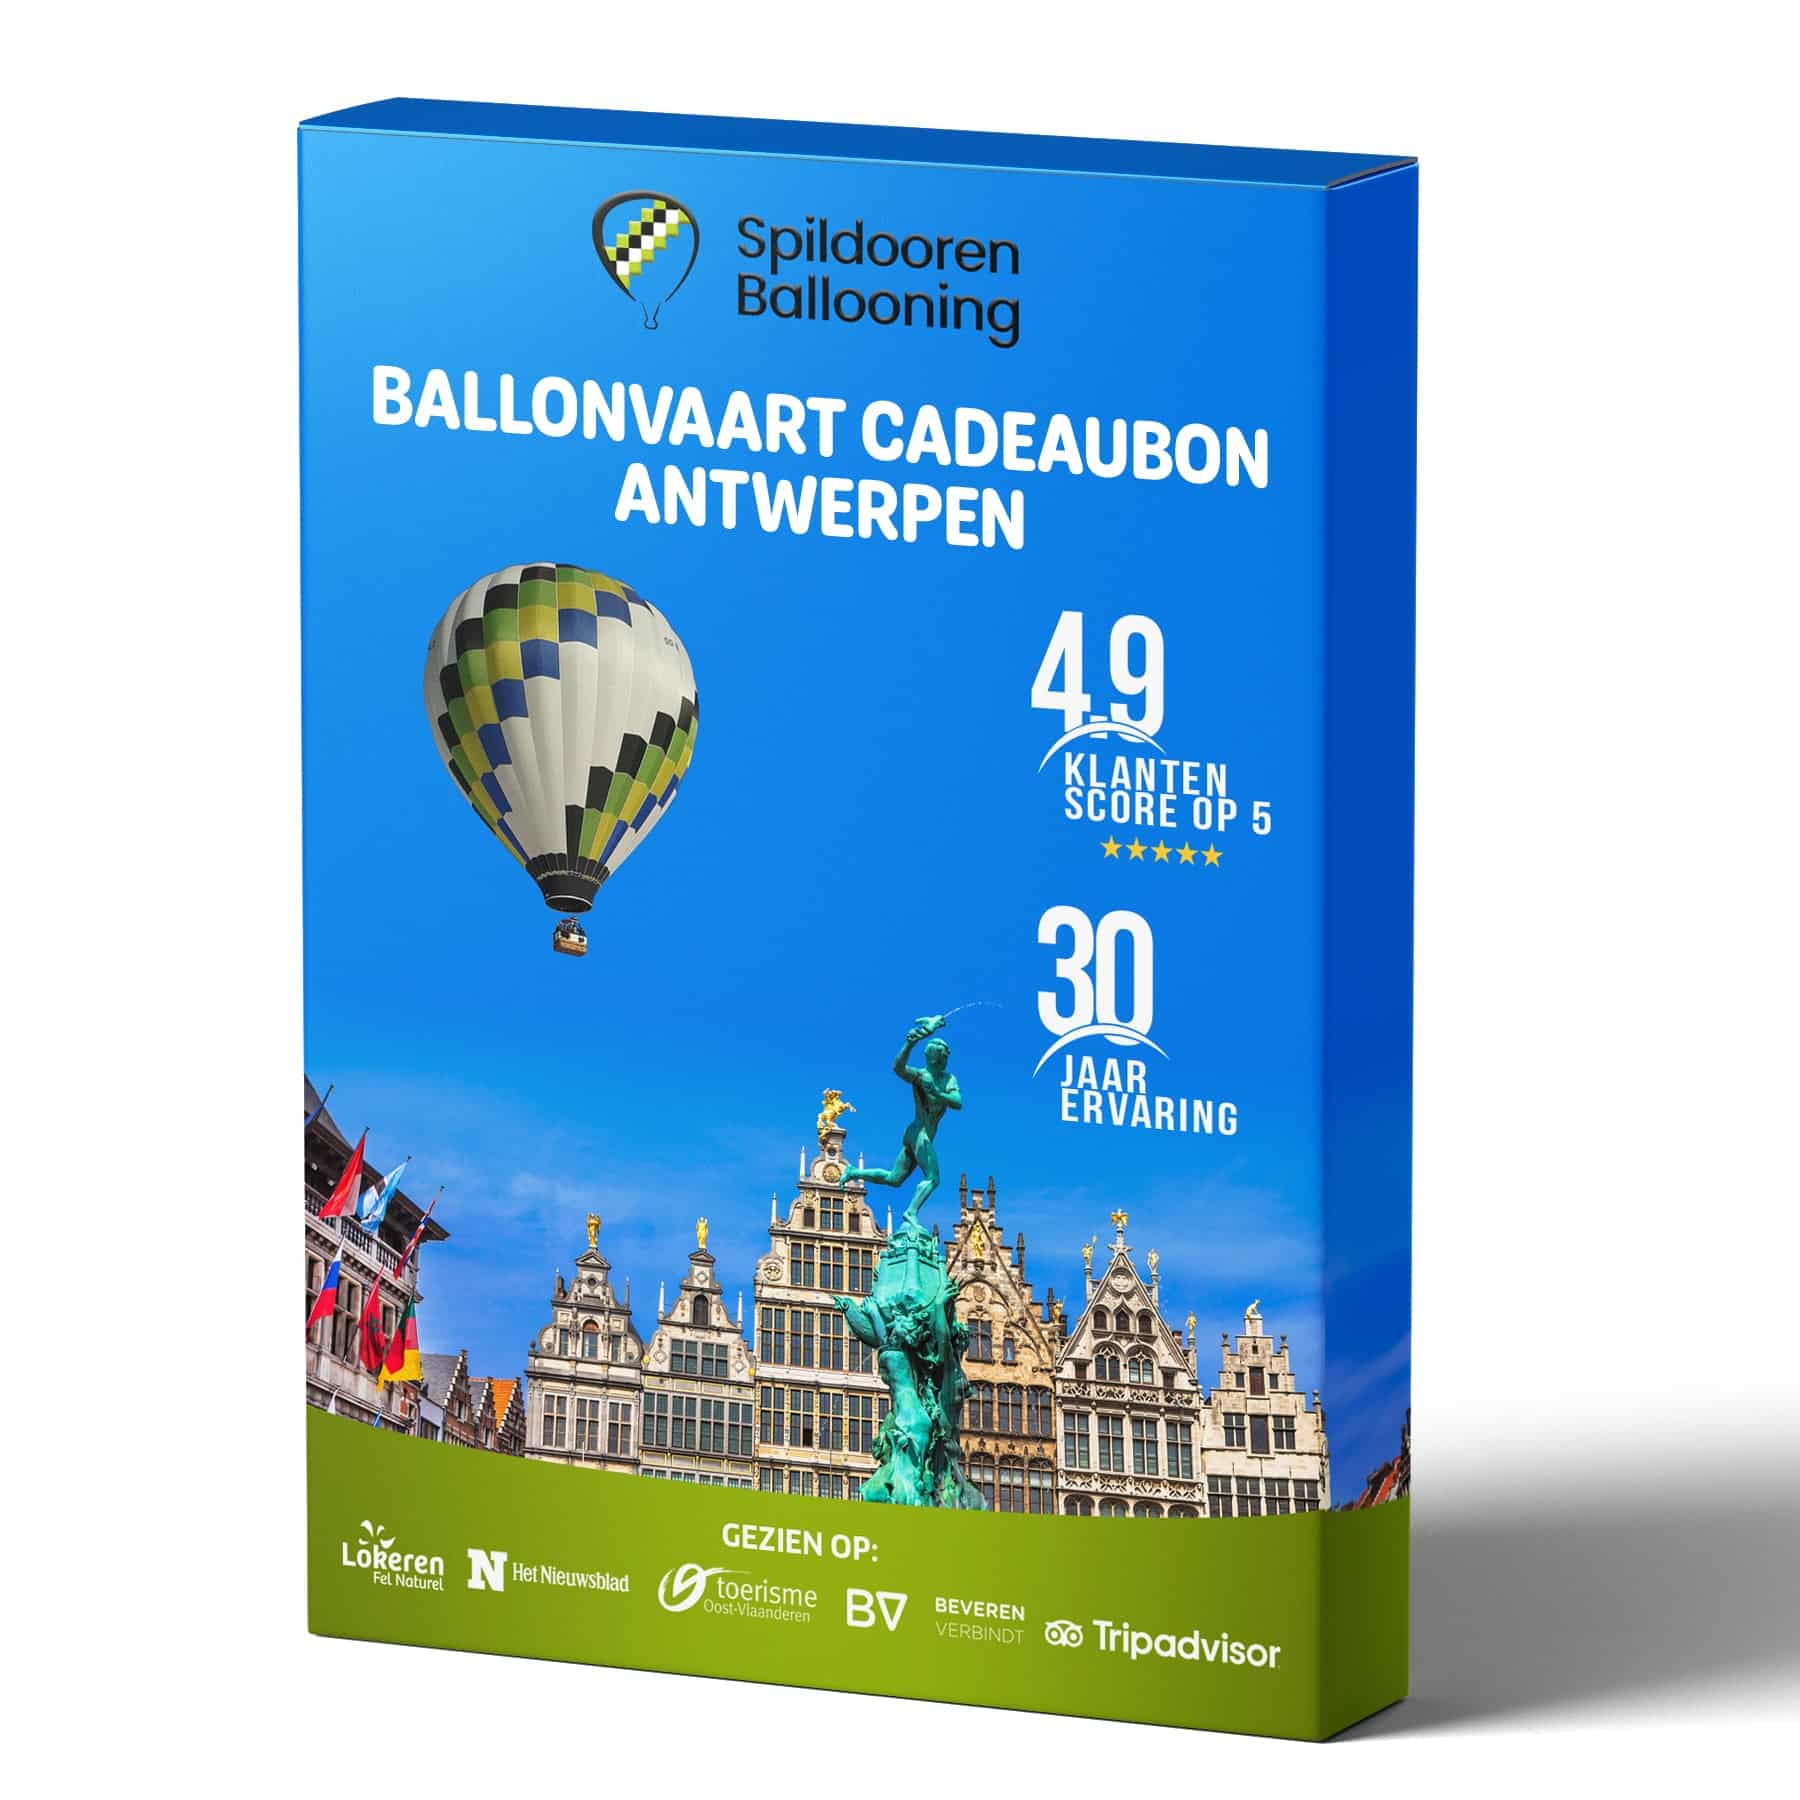 Ballonvaart cadeau Antwerpen? vanaf €149,- per persoon‎